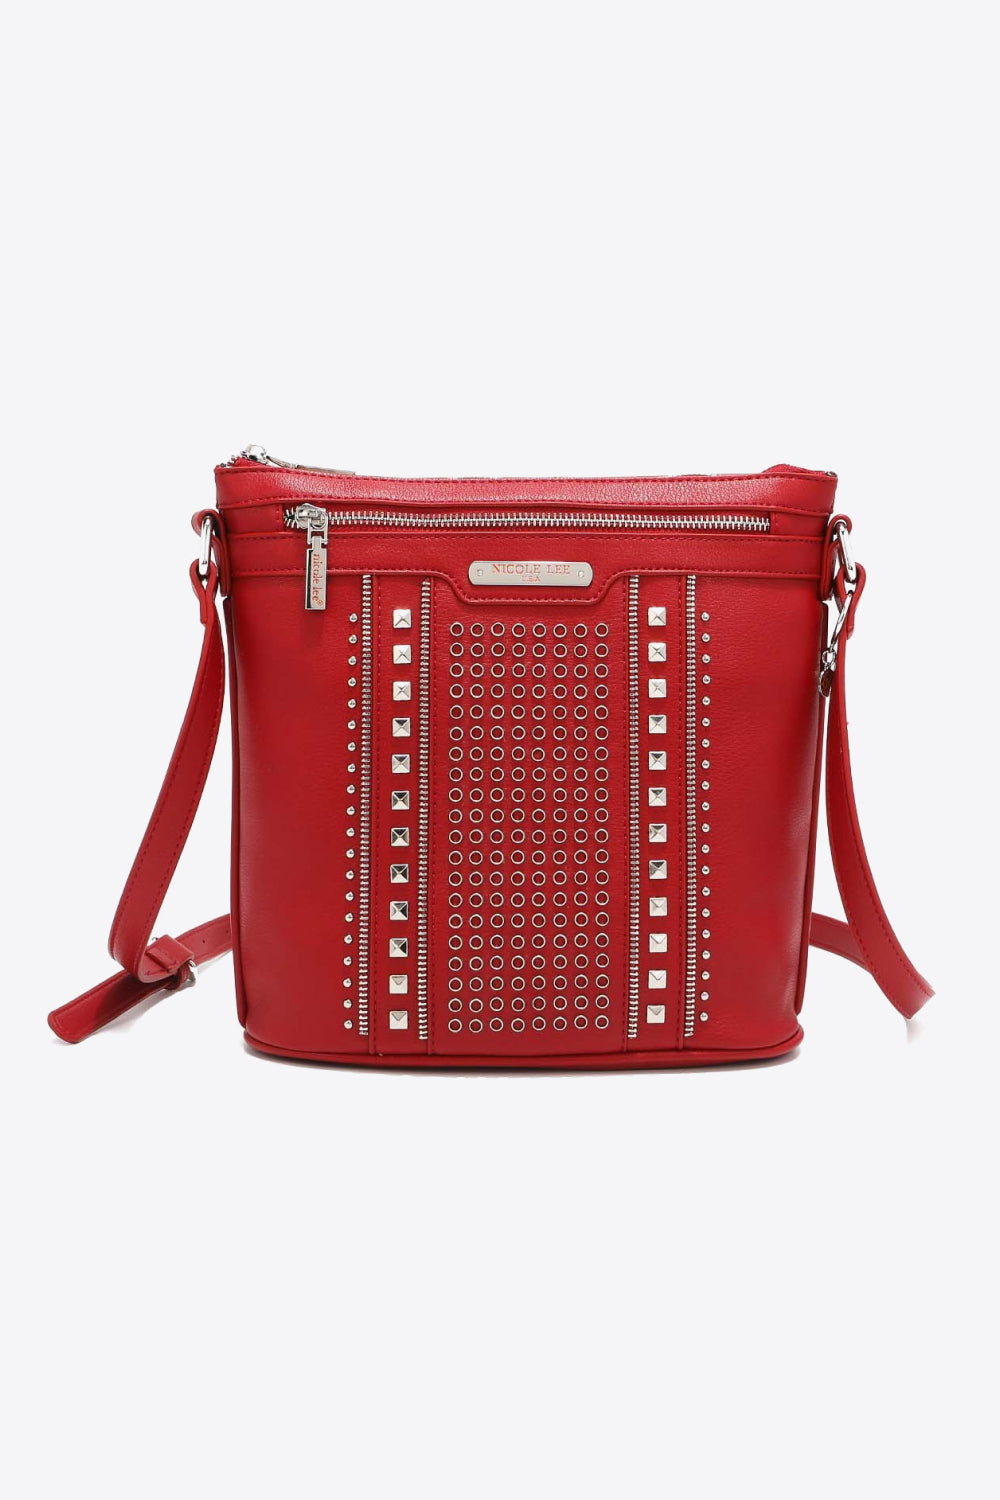 Nicole Lee USA Love Handbag - Dash Trend